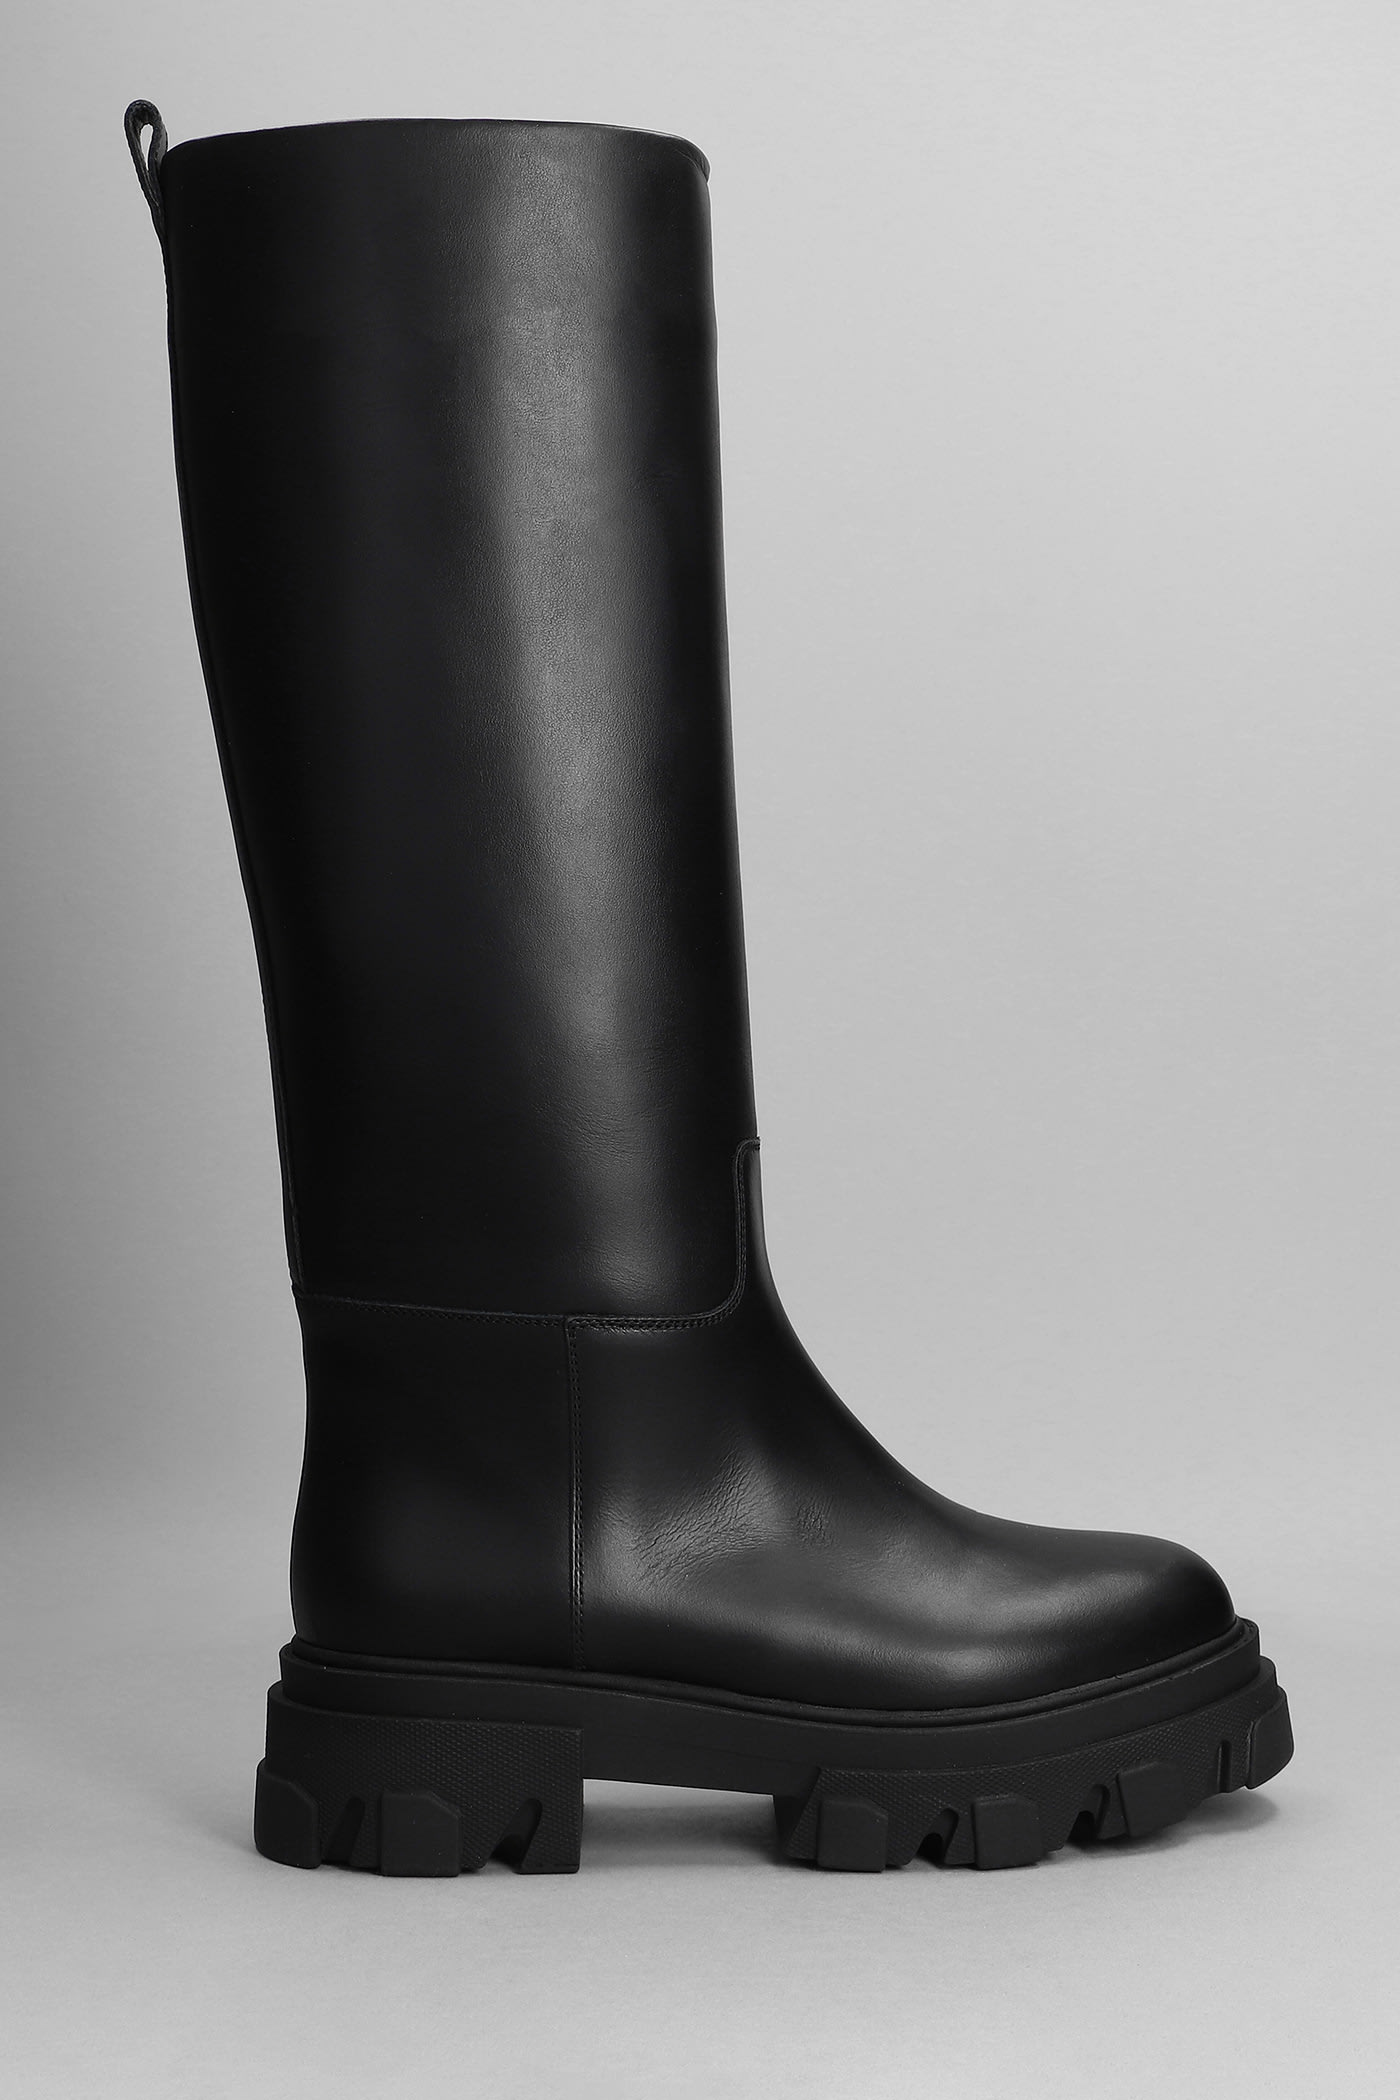 Gia X Pernille Teisbaek Perni 07 Low Heels Boots In Black Leather